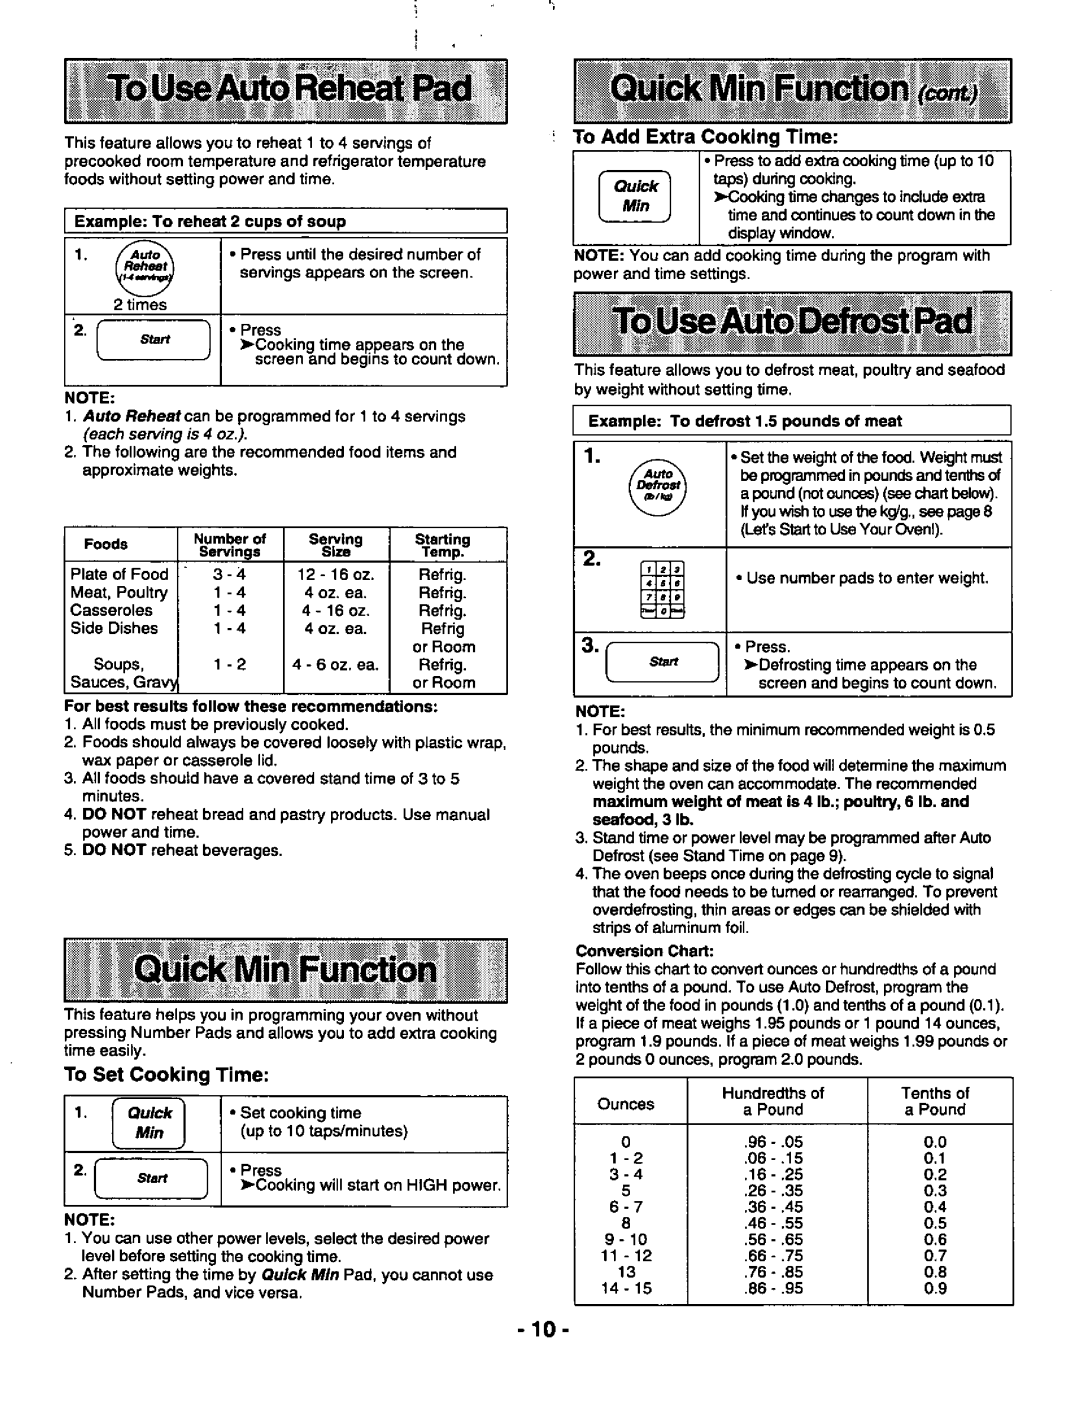 Panasonic NN-S658, NN-S558 manual 